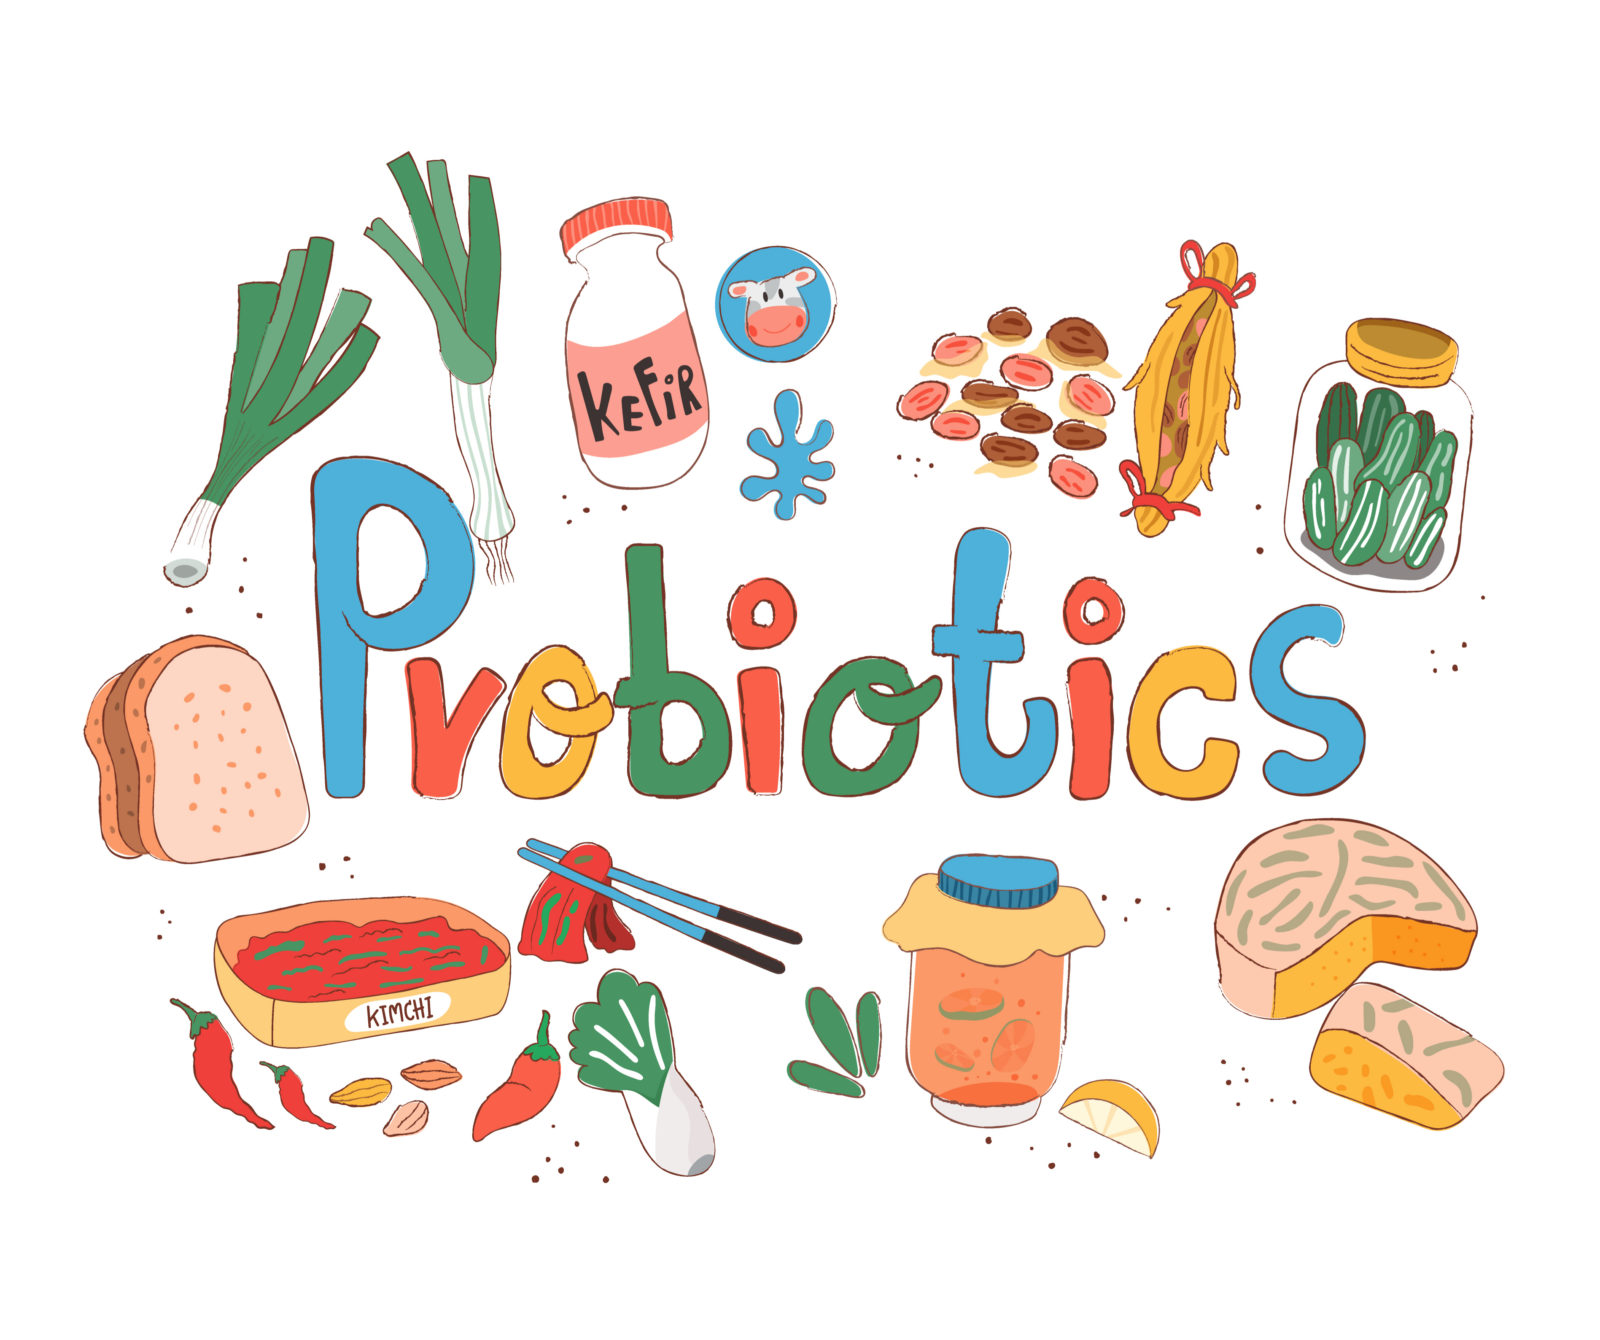 biofit probiotic reviews